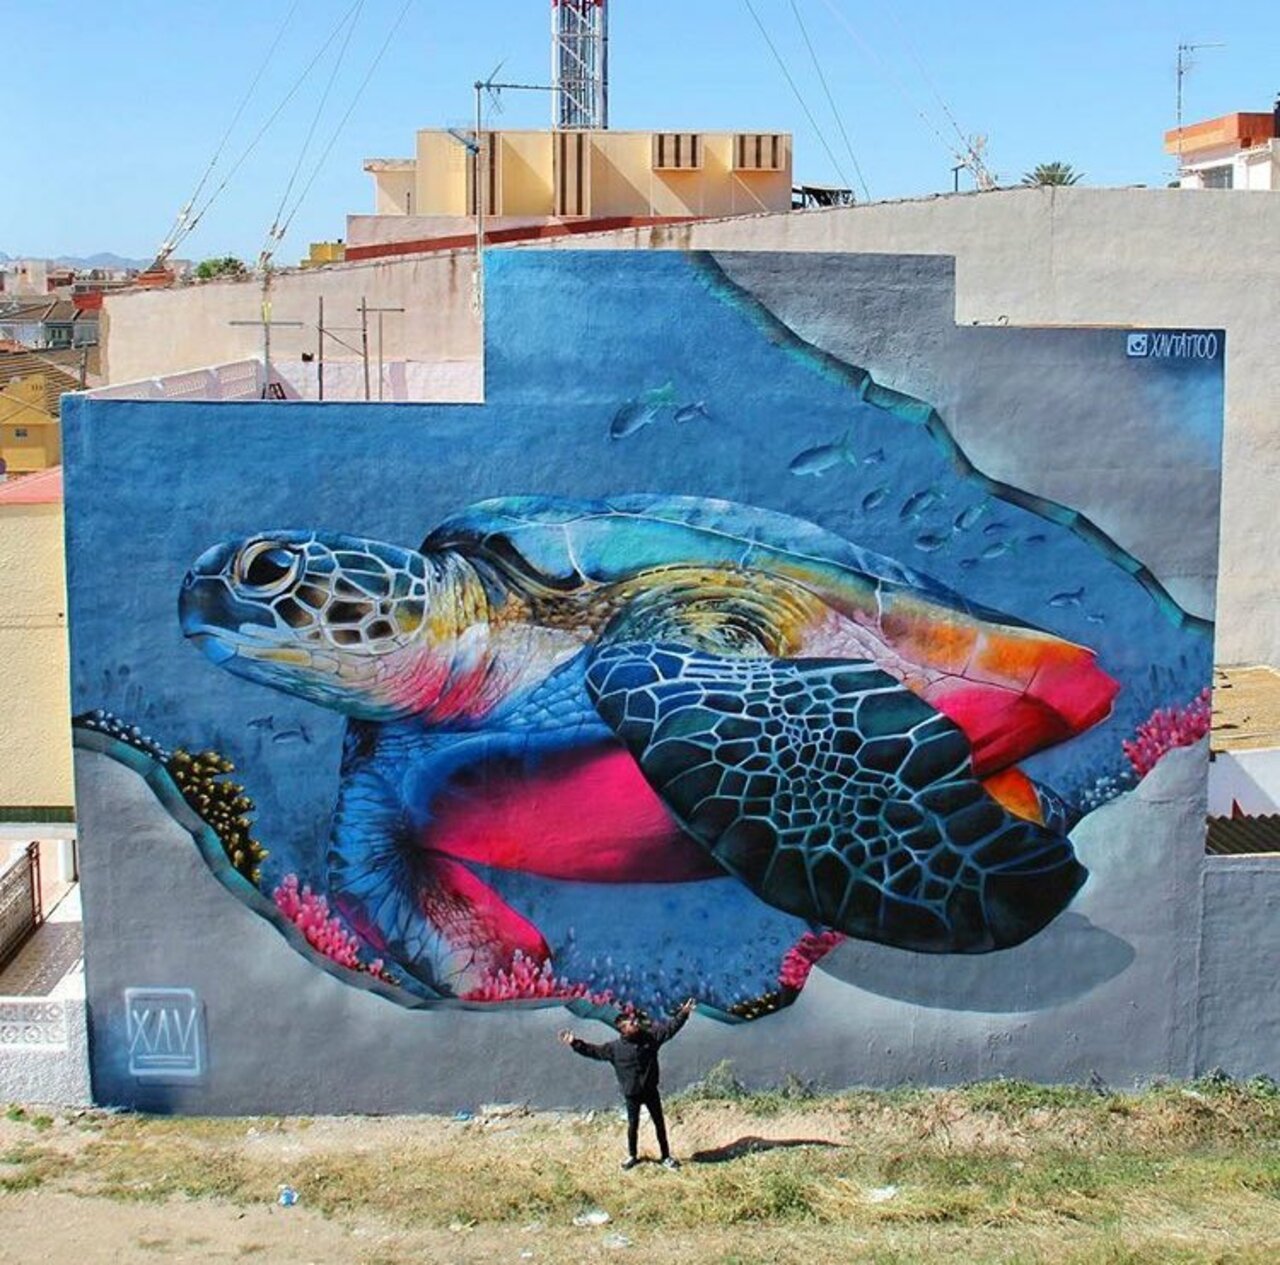 Street Art by XAV  Murcia, Spain #art #mural #graffiti #streetart https://t.co/jiSNWLe7ek